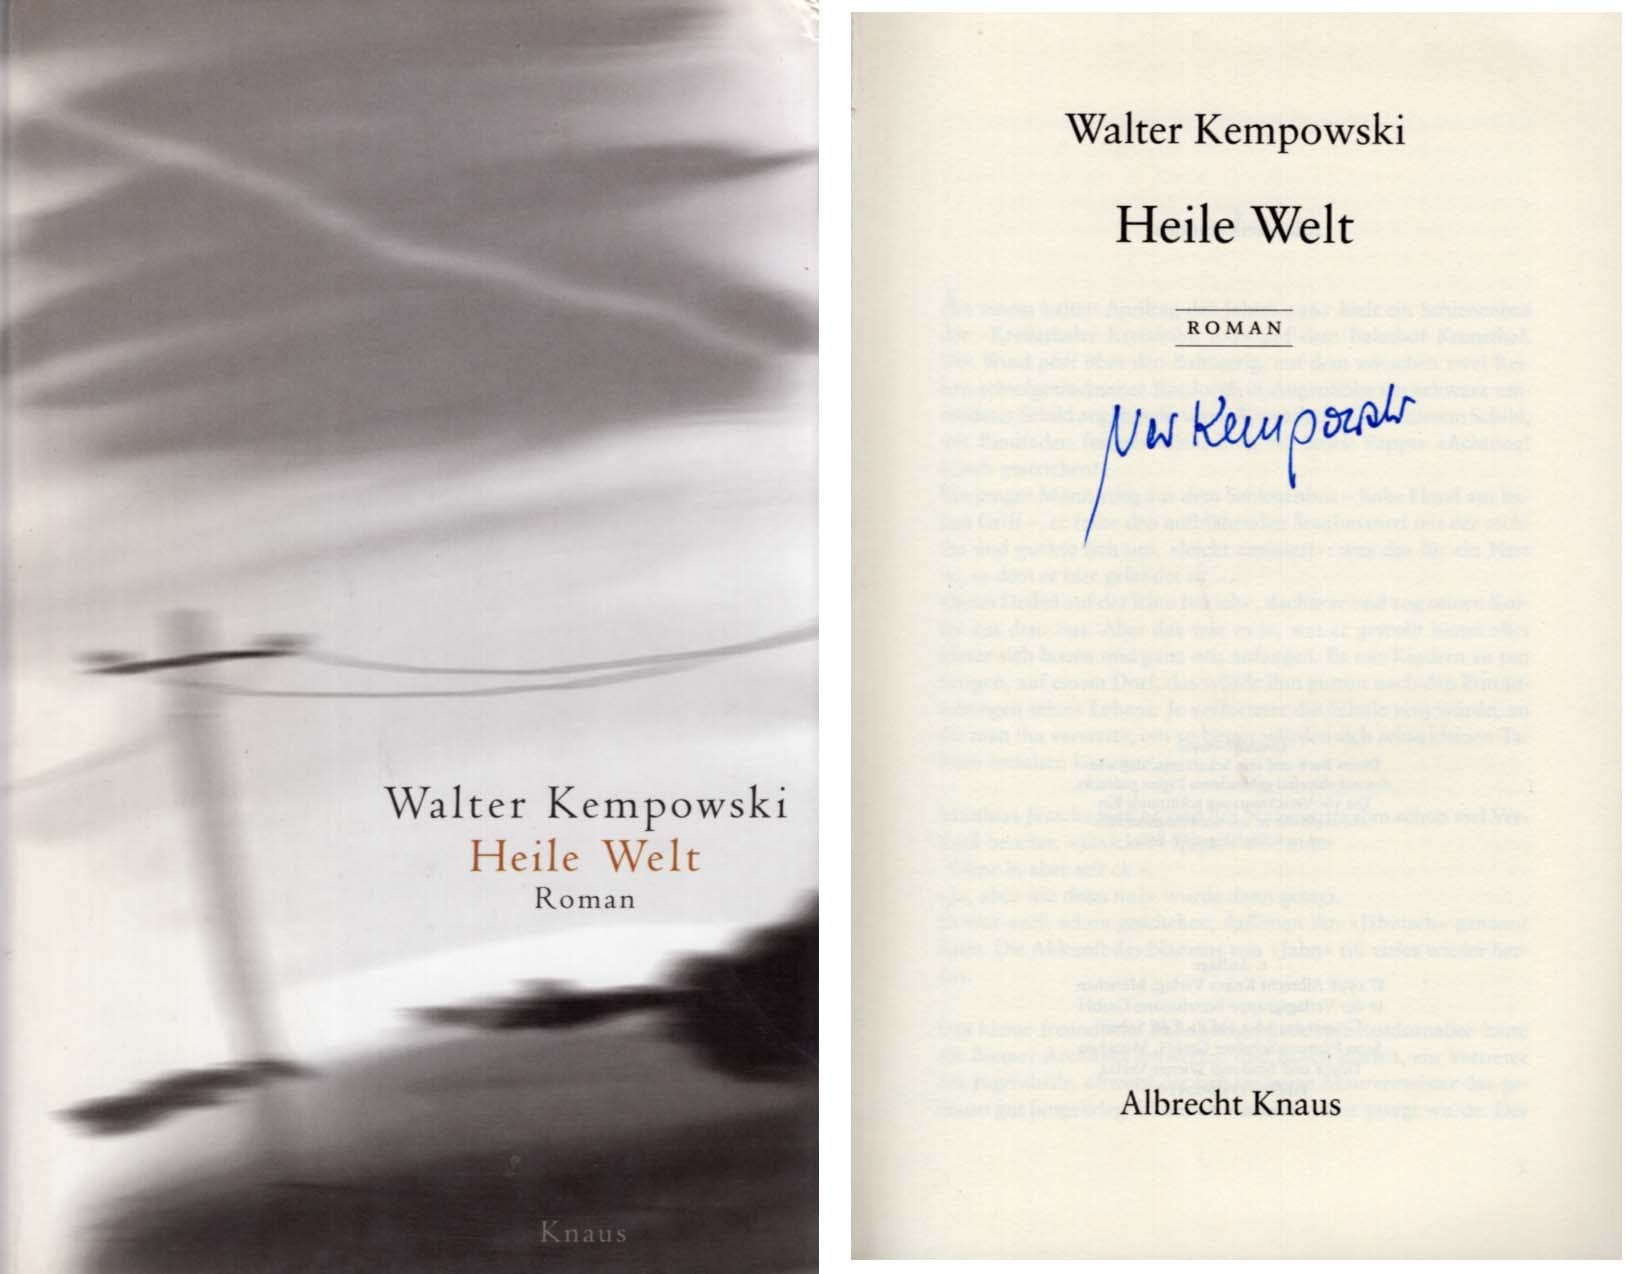 Walter  Kempowski Autograph Autogramm | ID 8074978984085